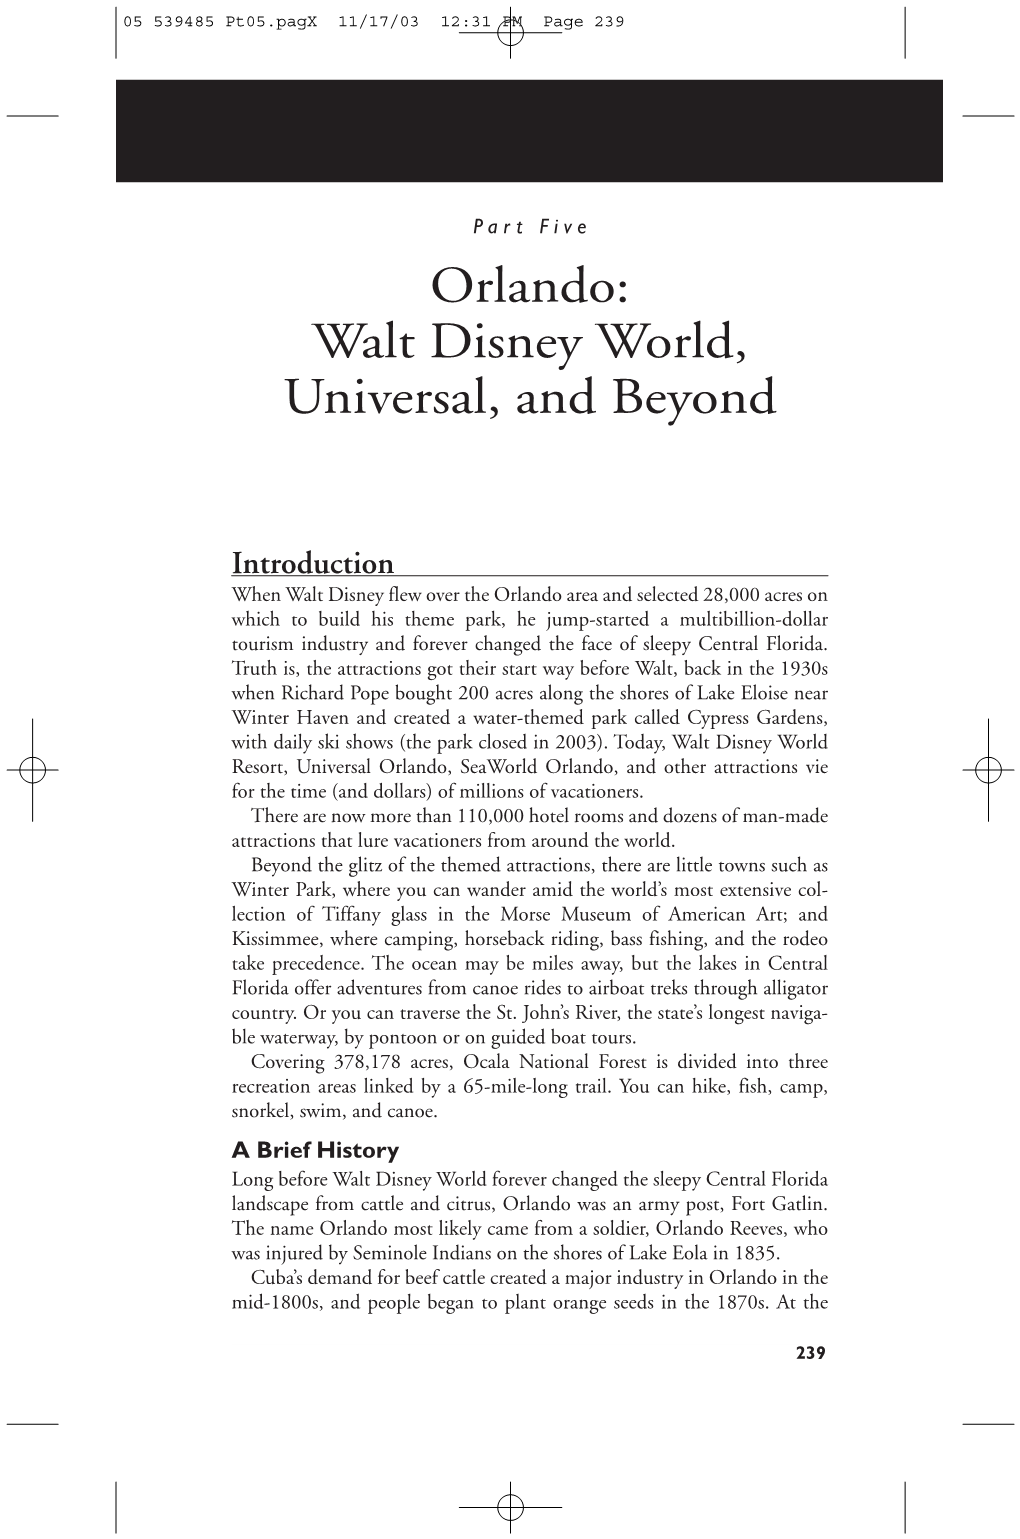 Walt Disney World, Universal, and Beyond